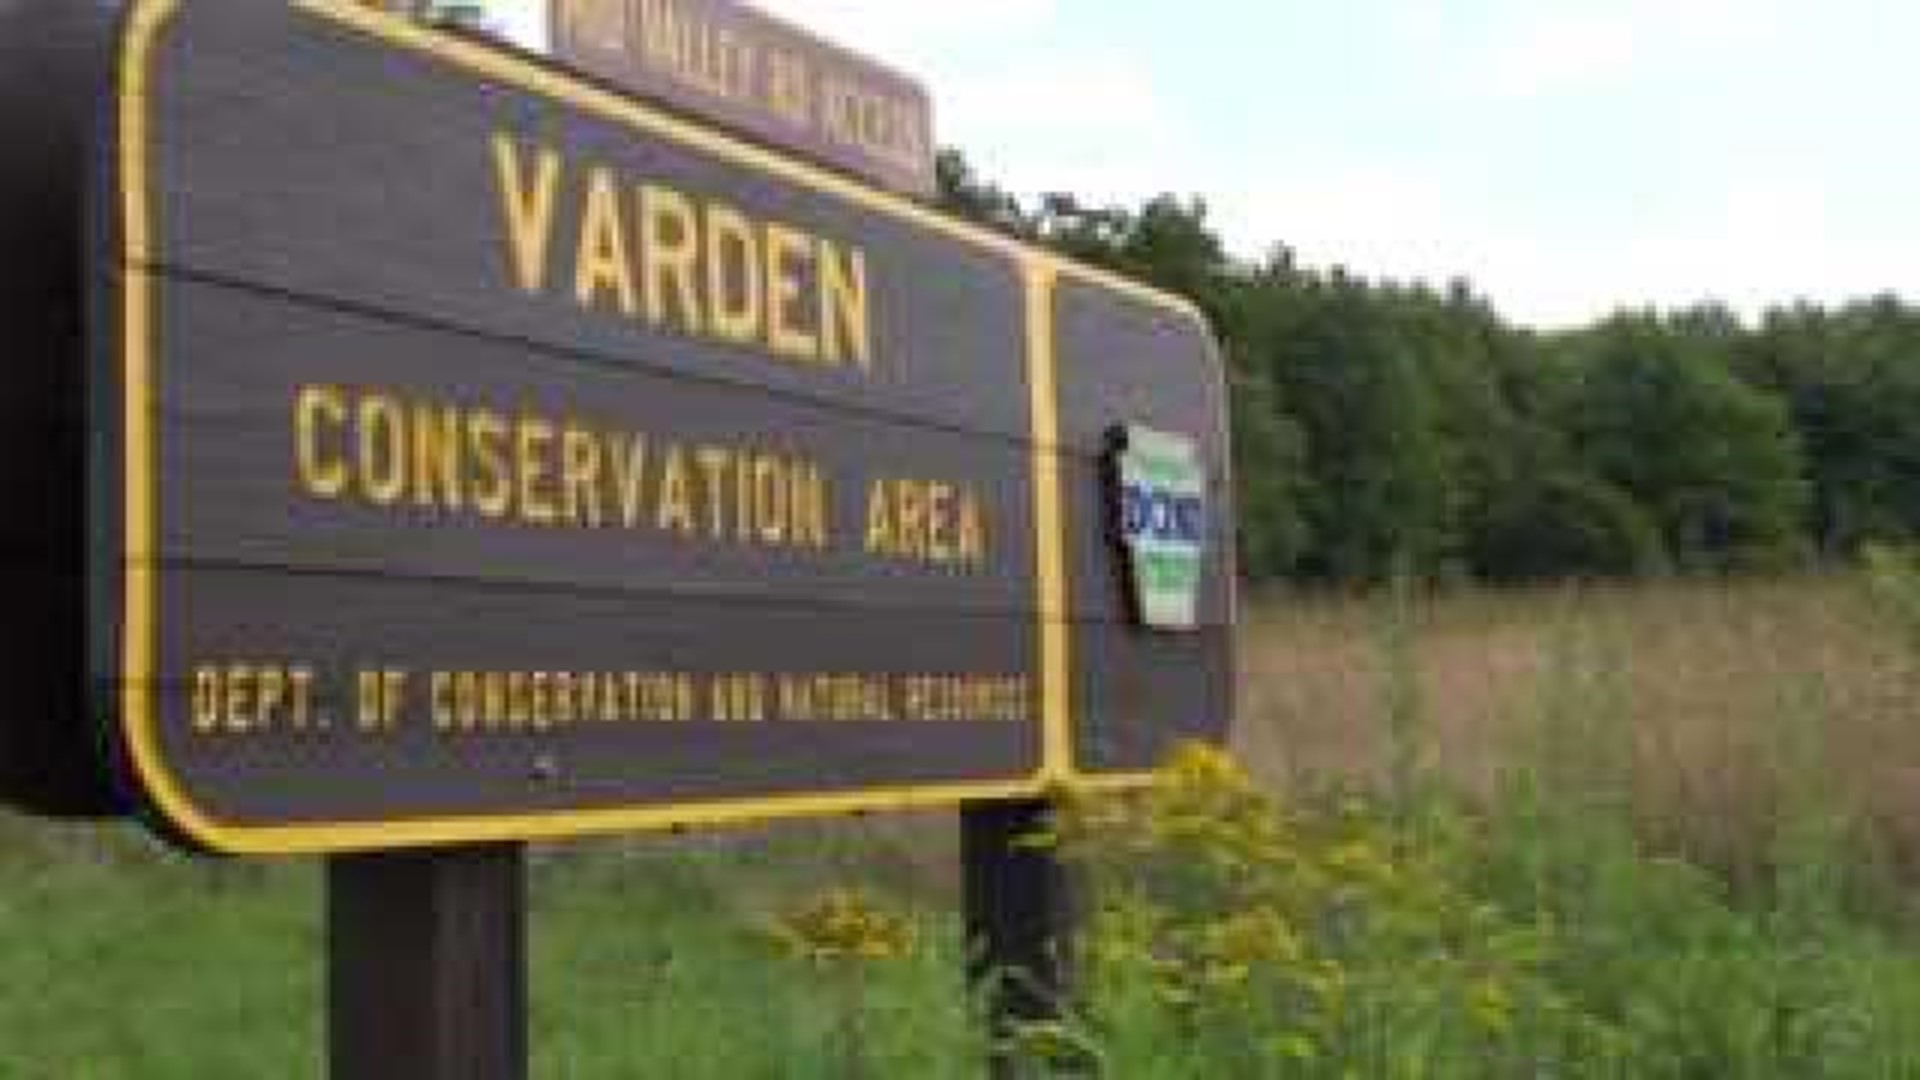 Varden Conservation Area